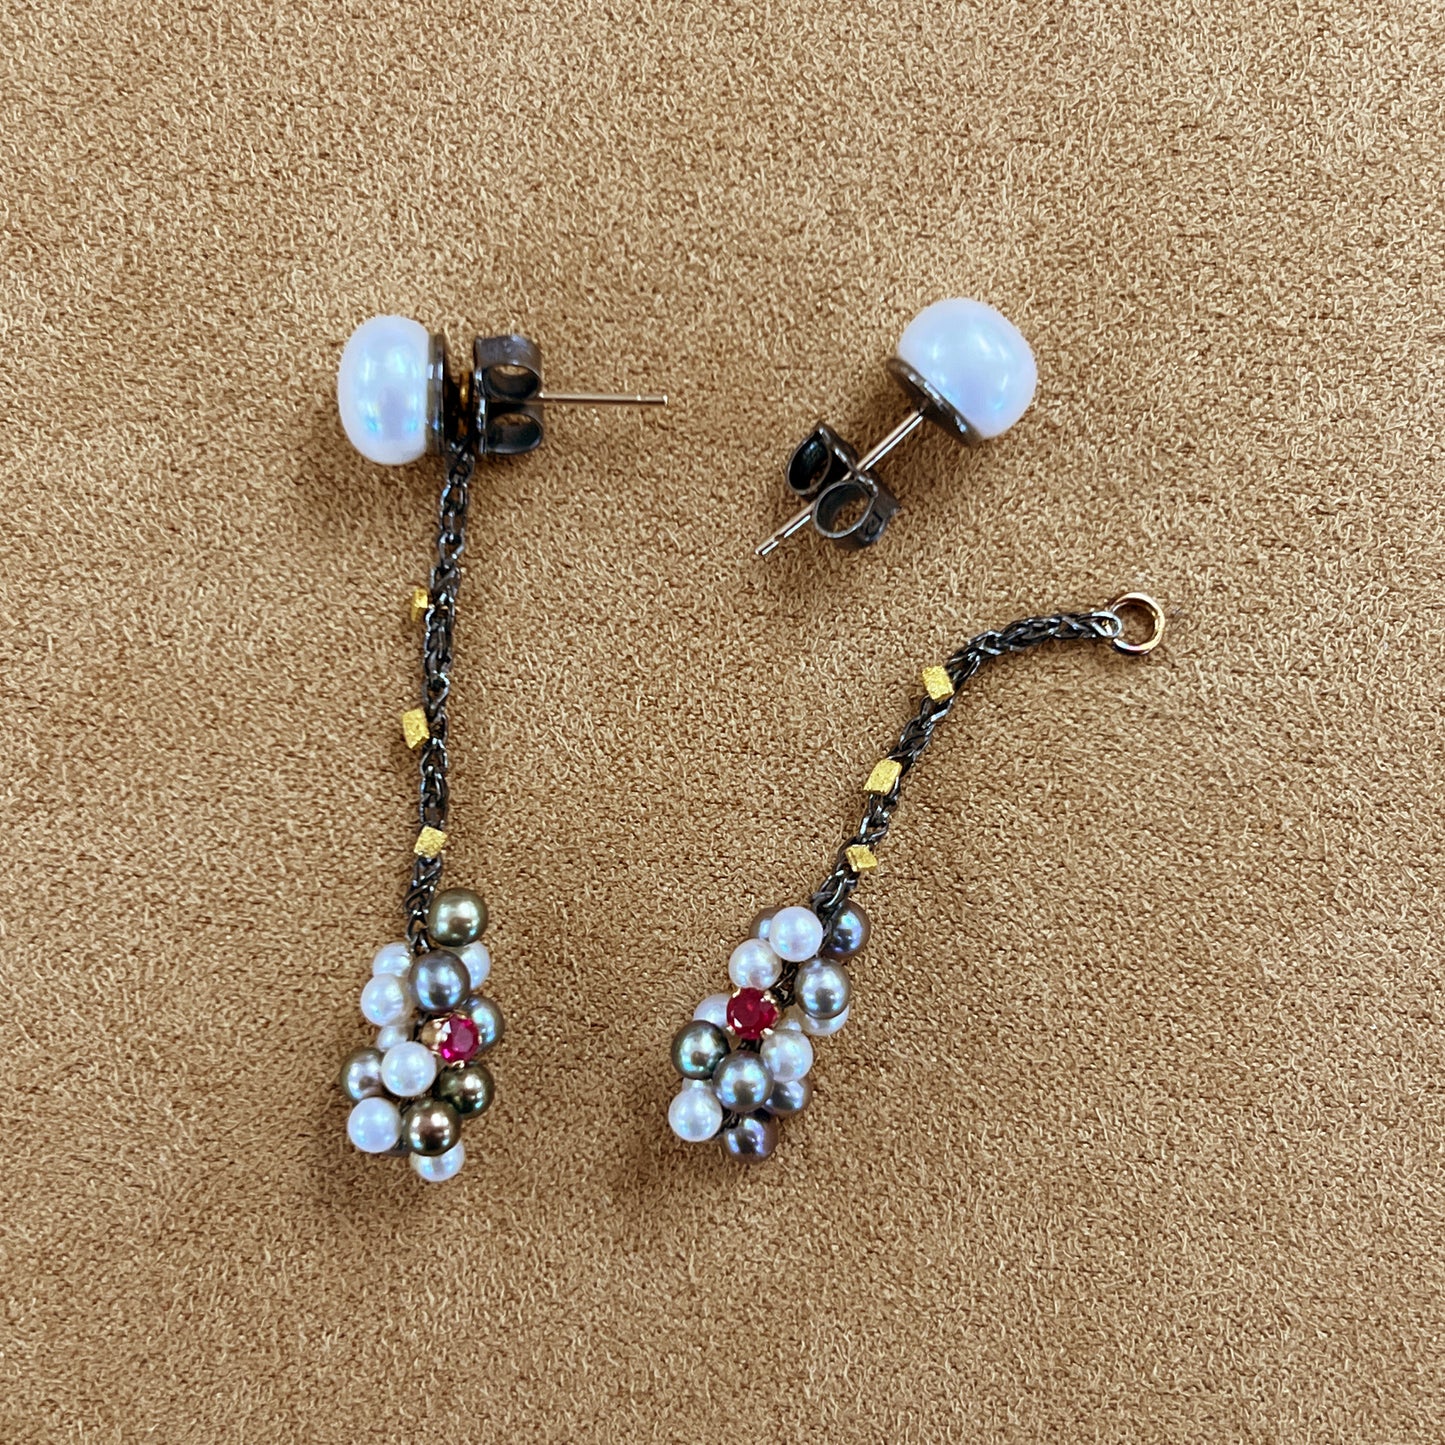 Pearl and Ruby Cluster Jacket earrings